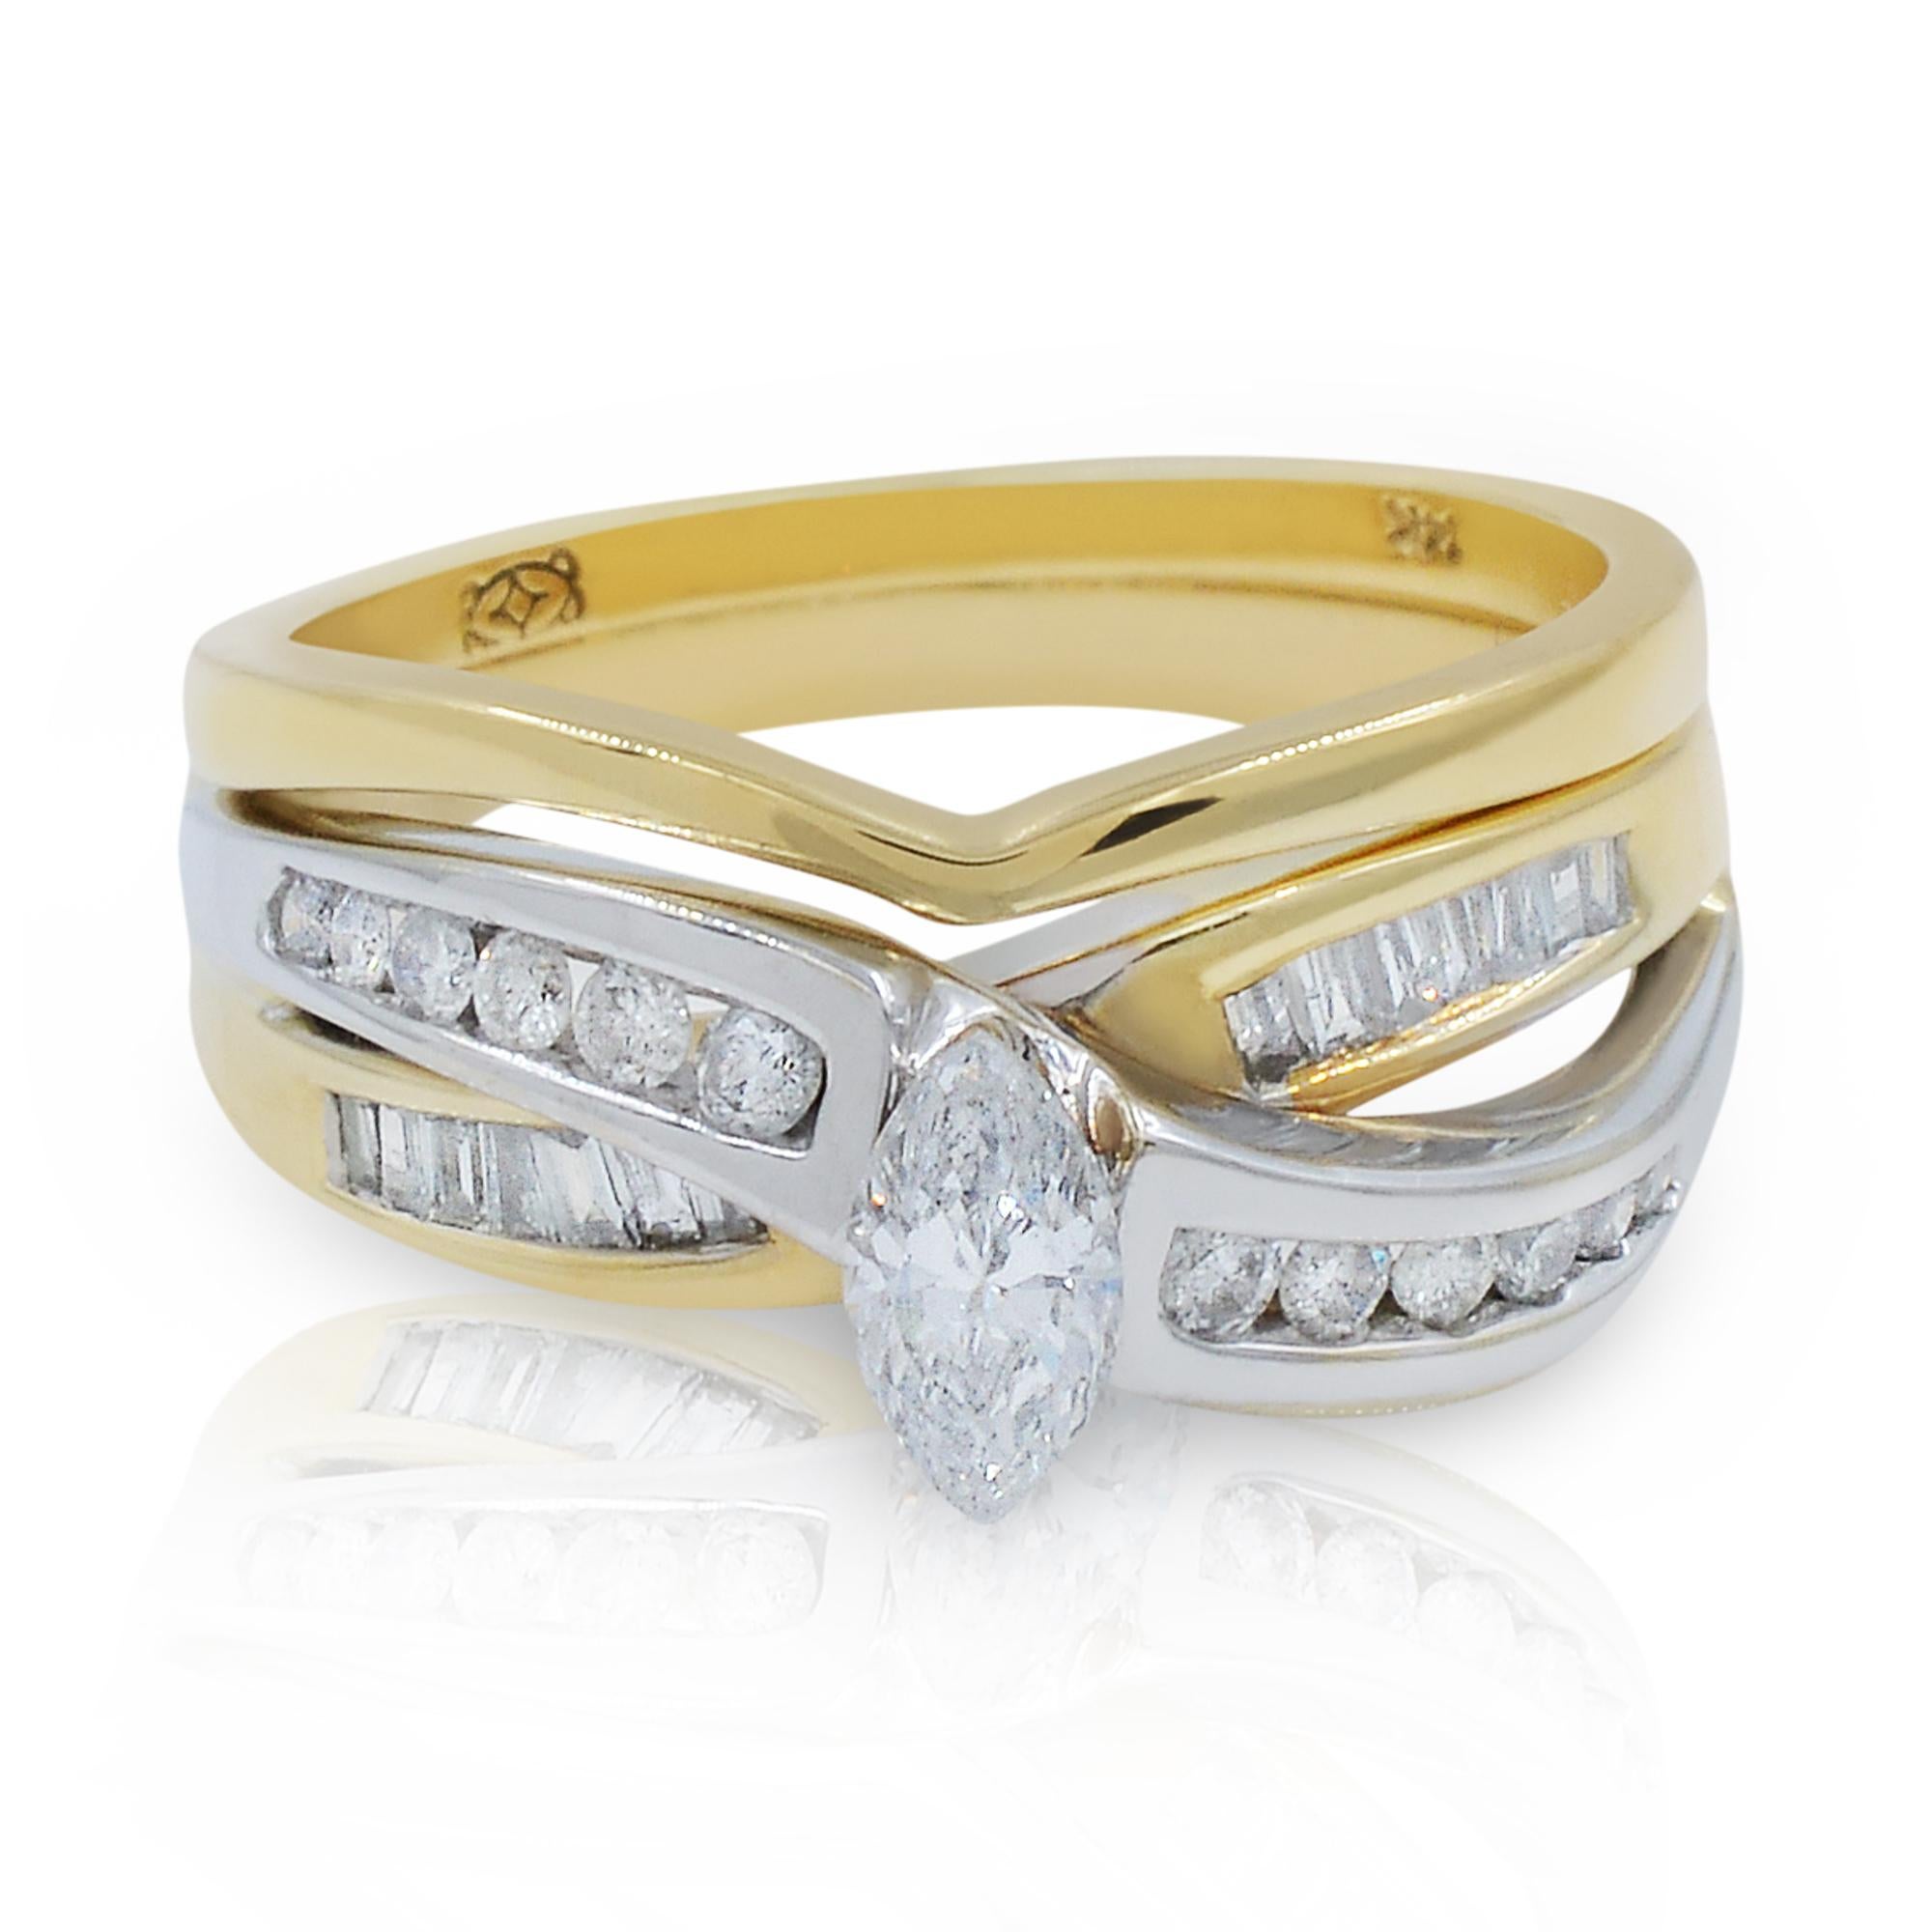 Modern Rachel Koen Marquise Cut Diamond Engagement Ring Set 14K Yellow Gold 1.05Cttw For Sale